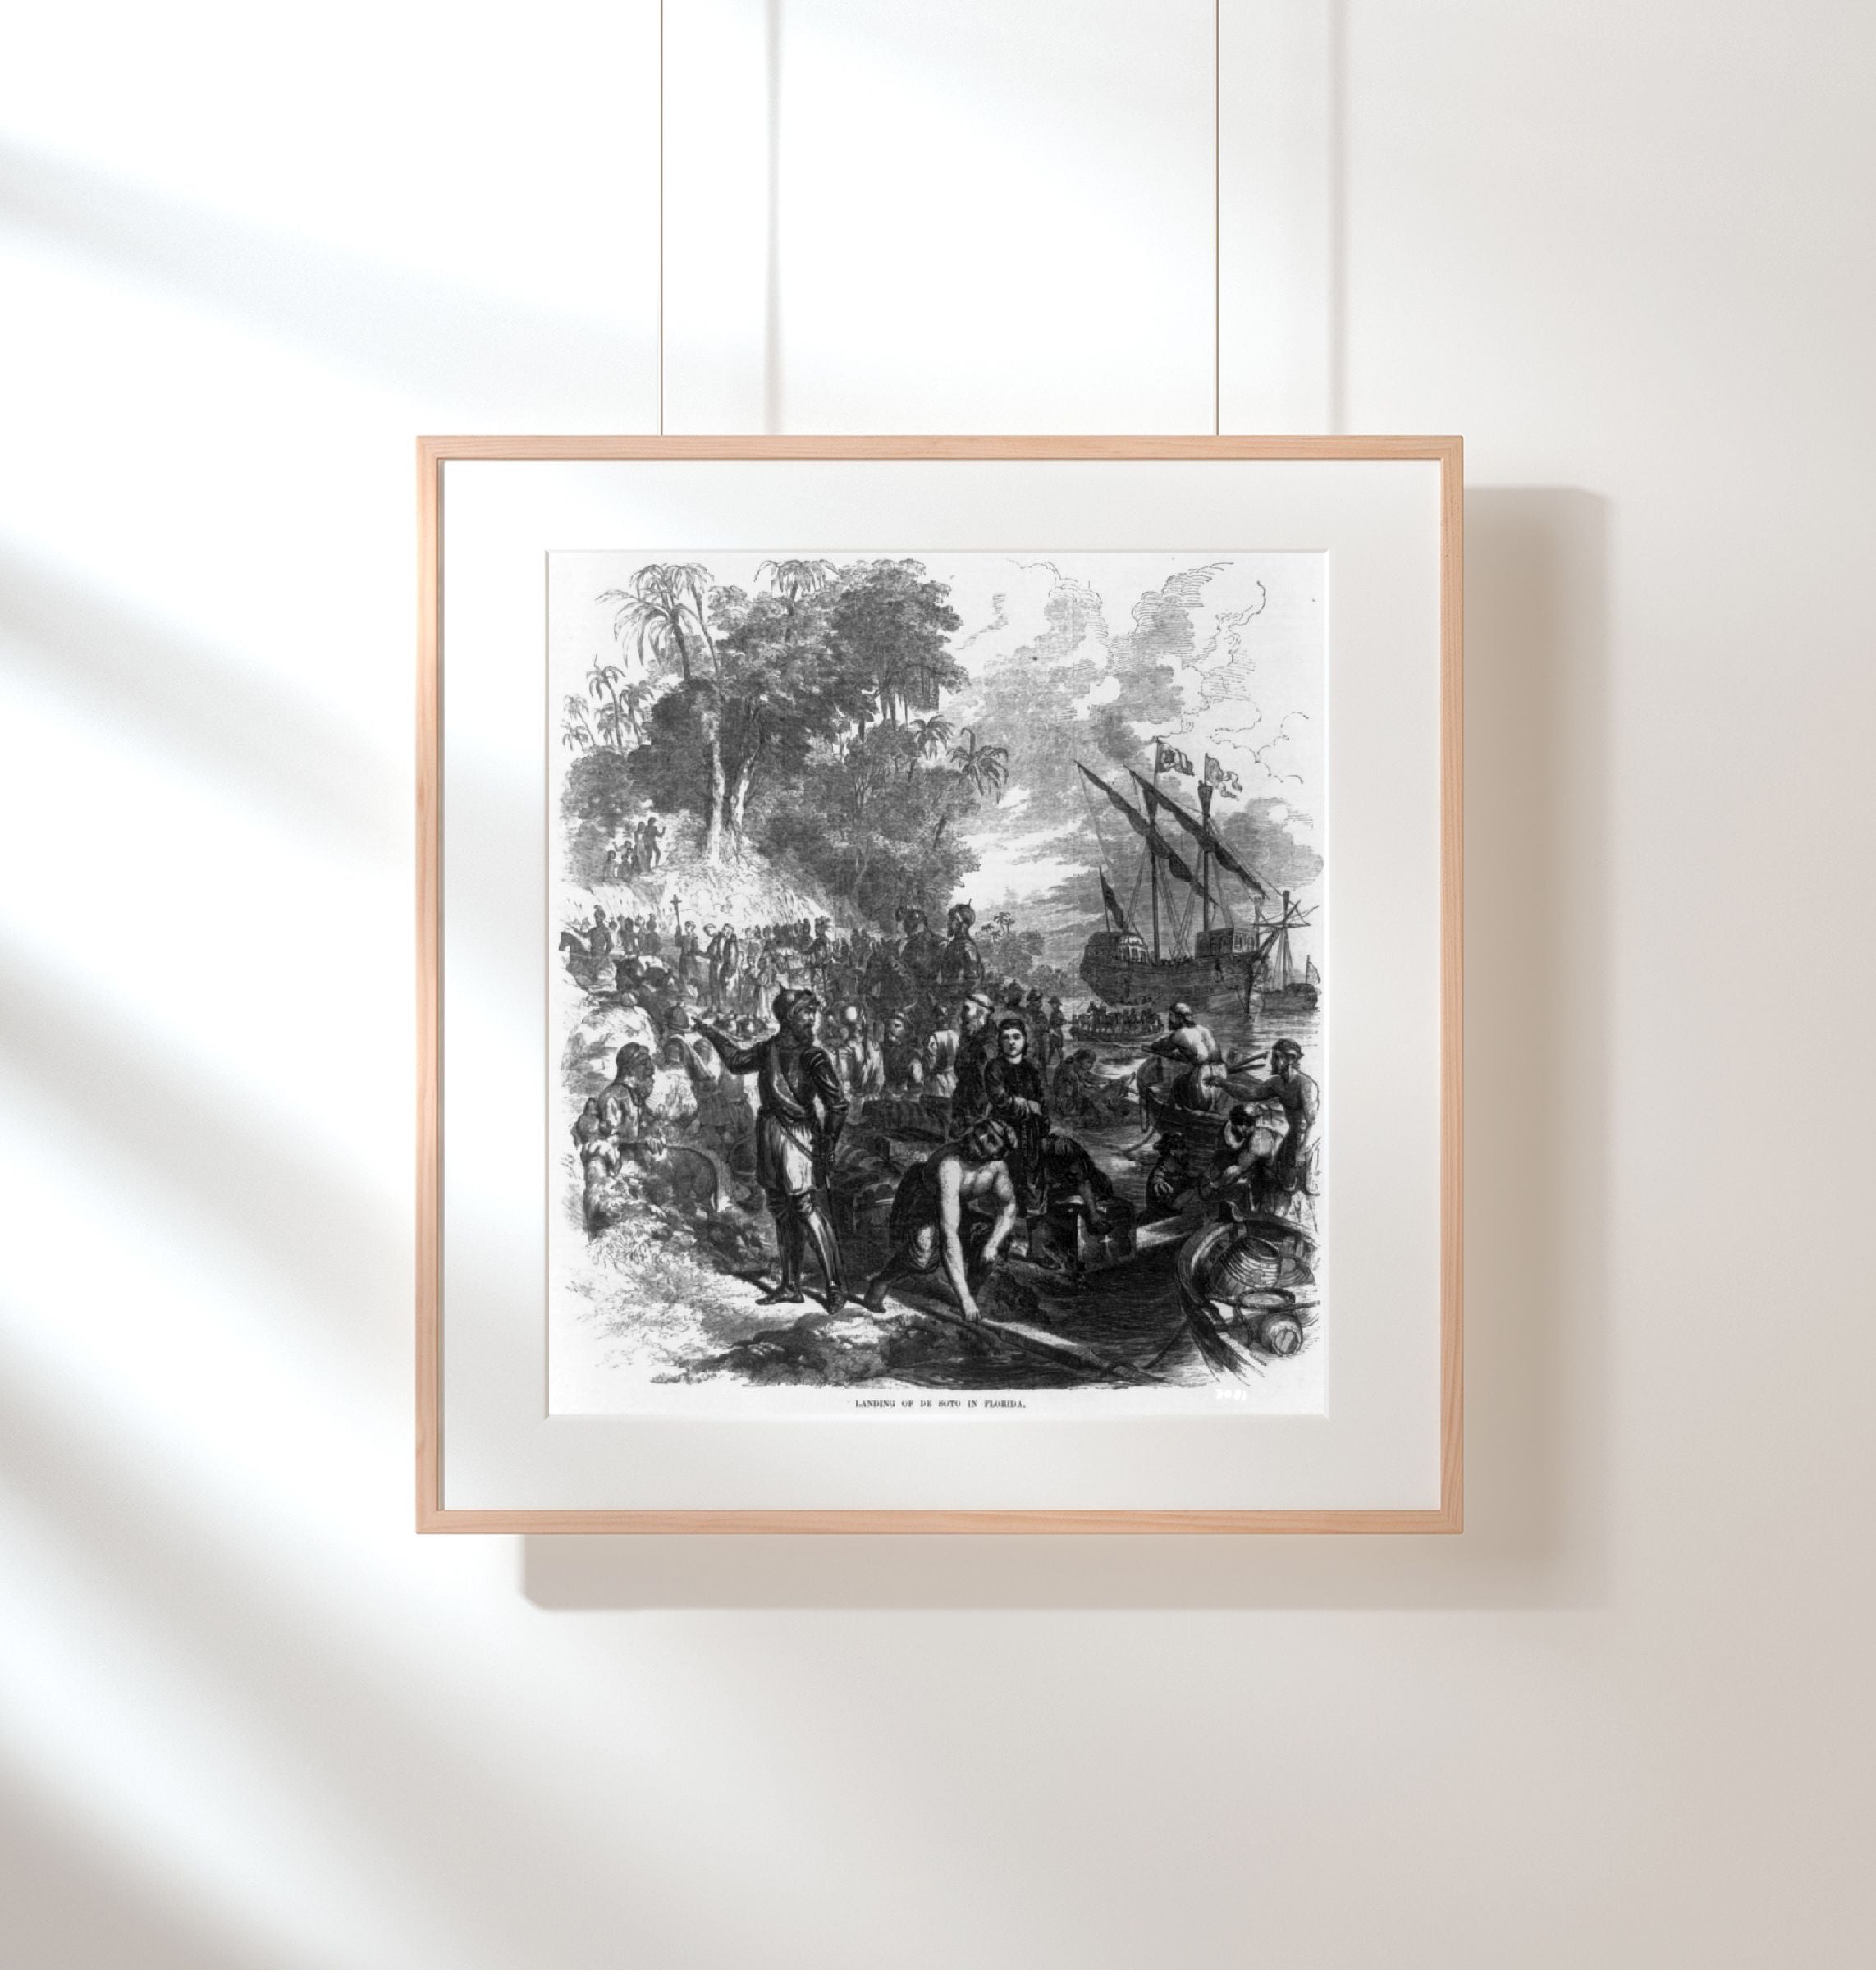 Photo: Landing of Hernando De Soto in Florida, FL, soldiers, 1855